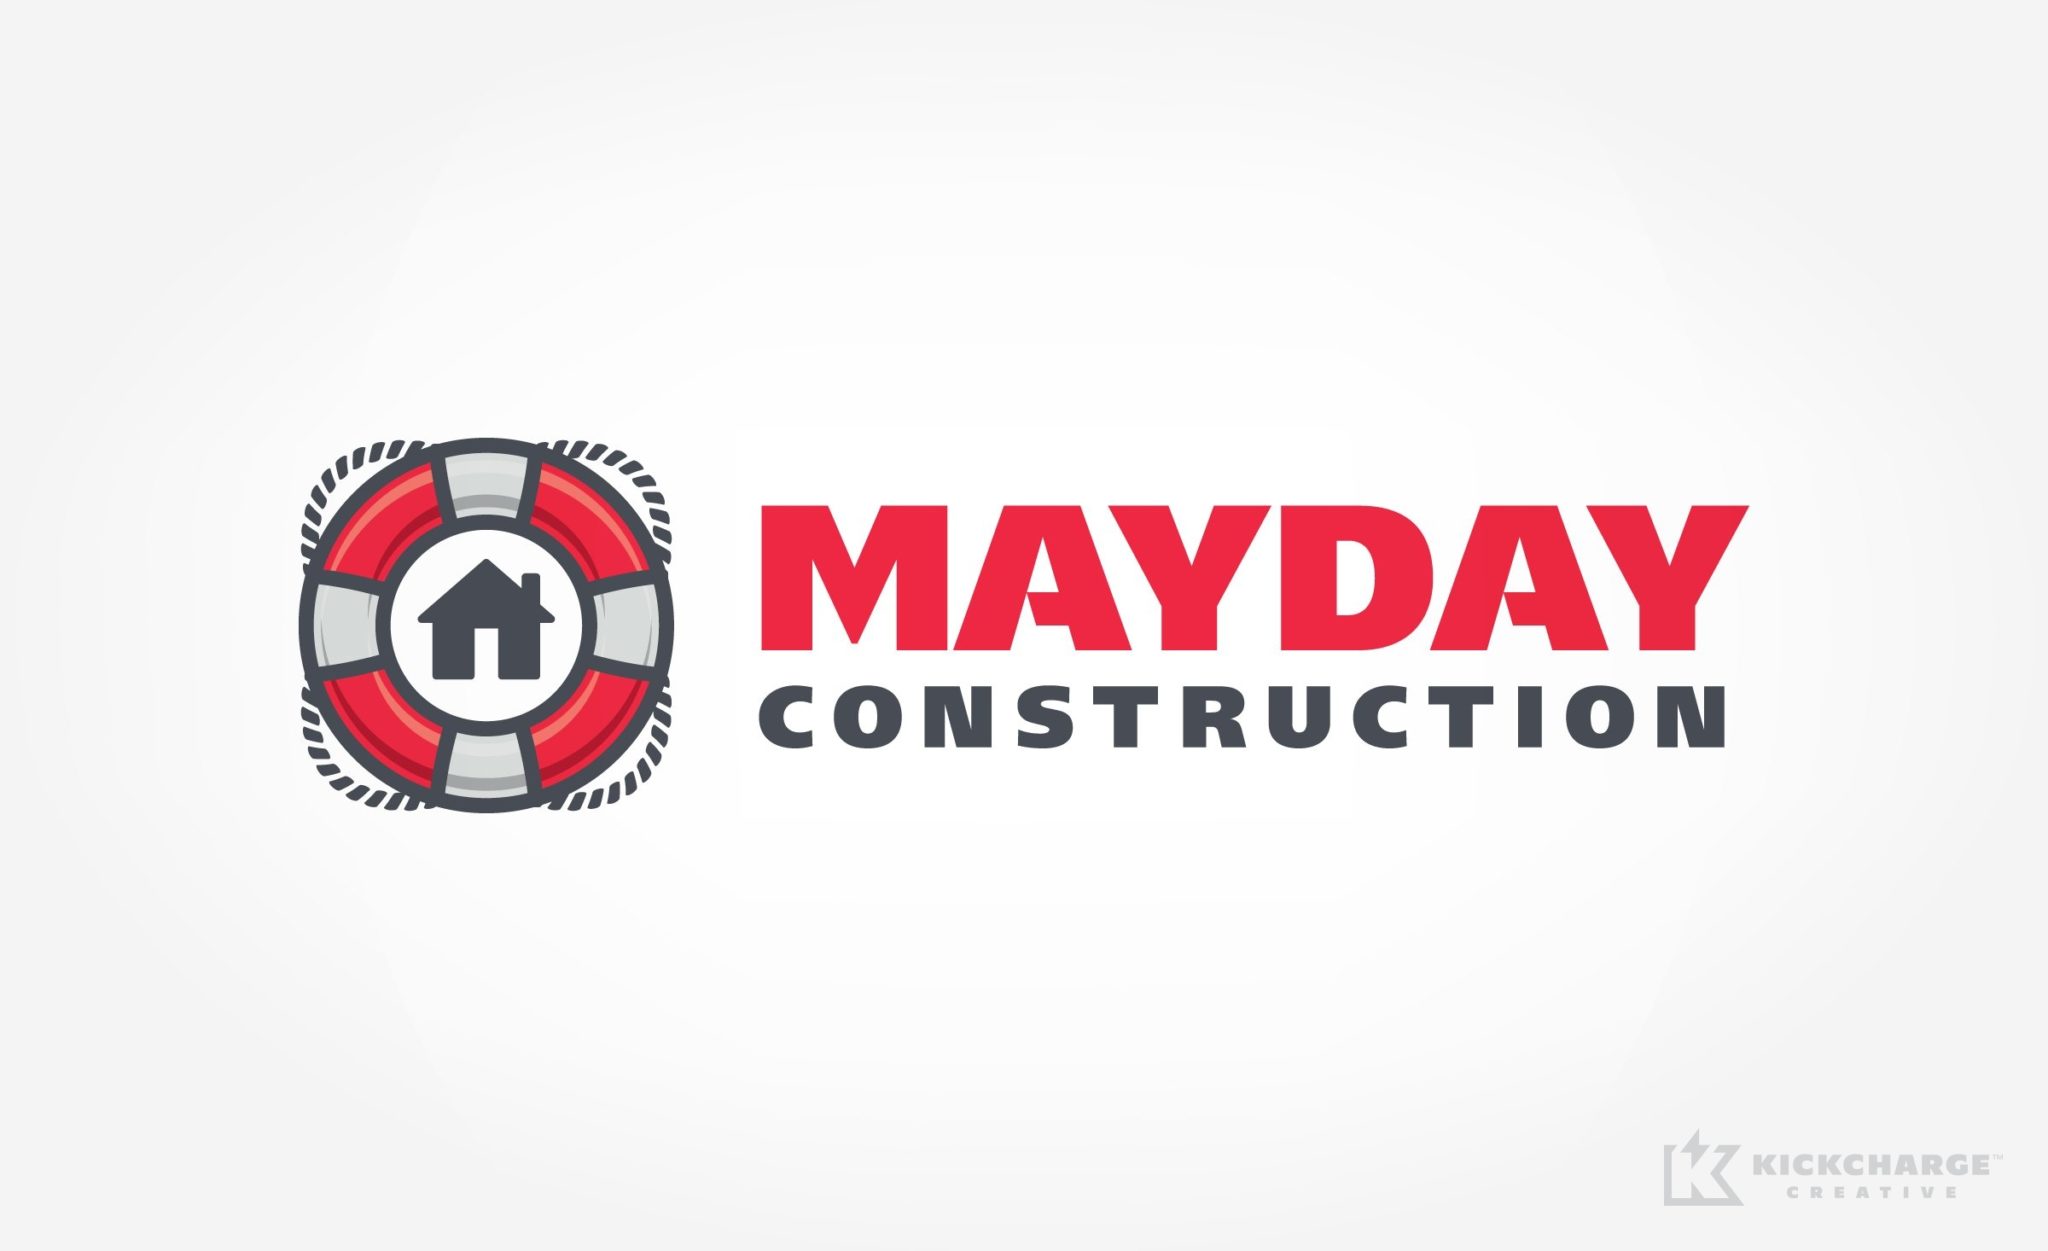 Mayday Construction